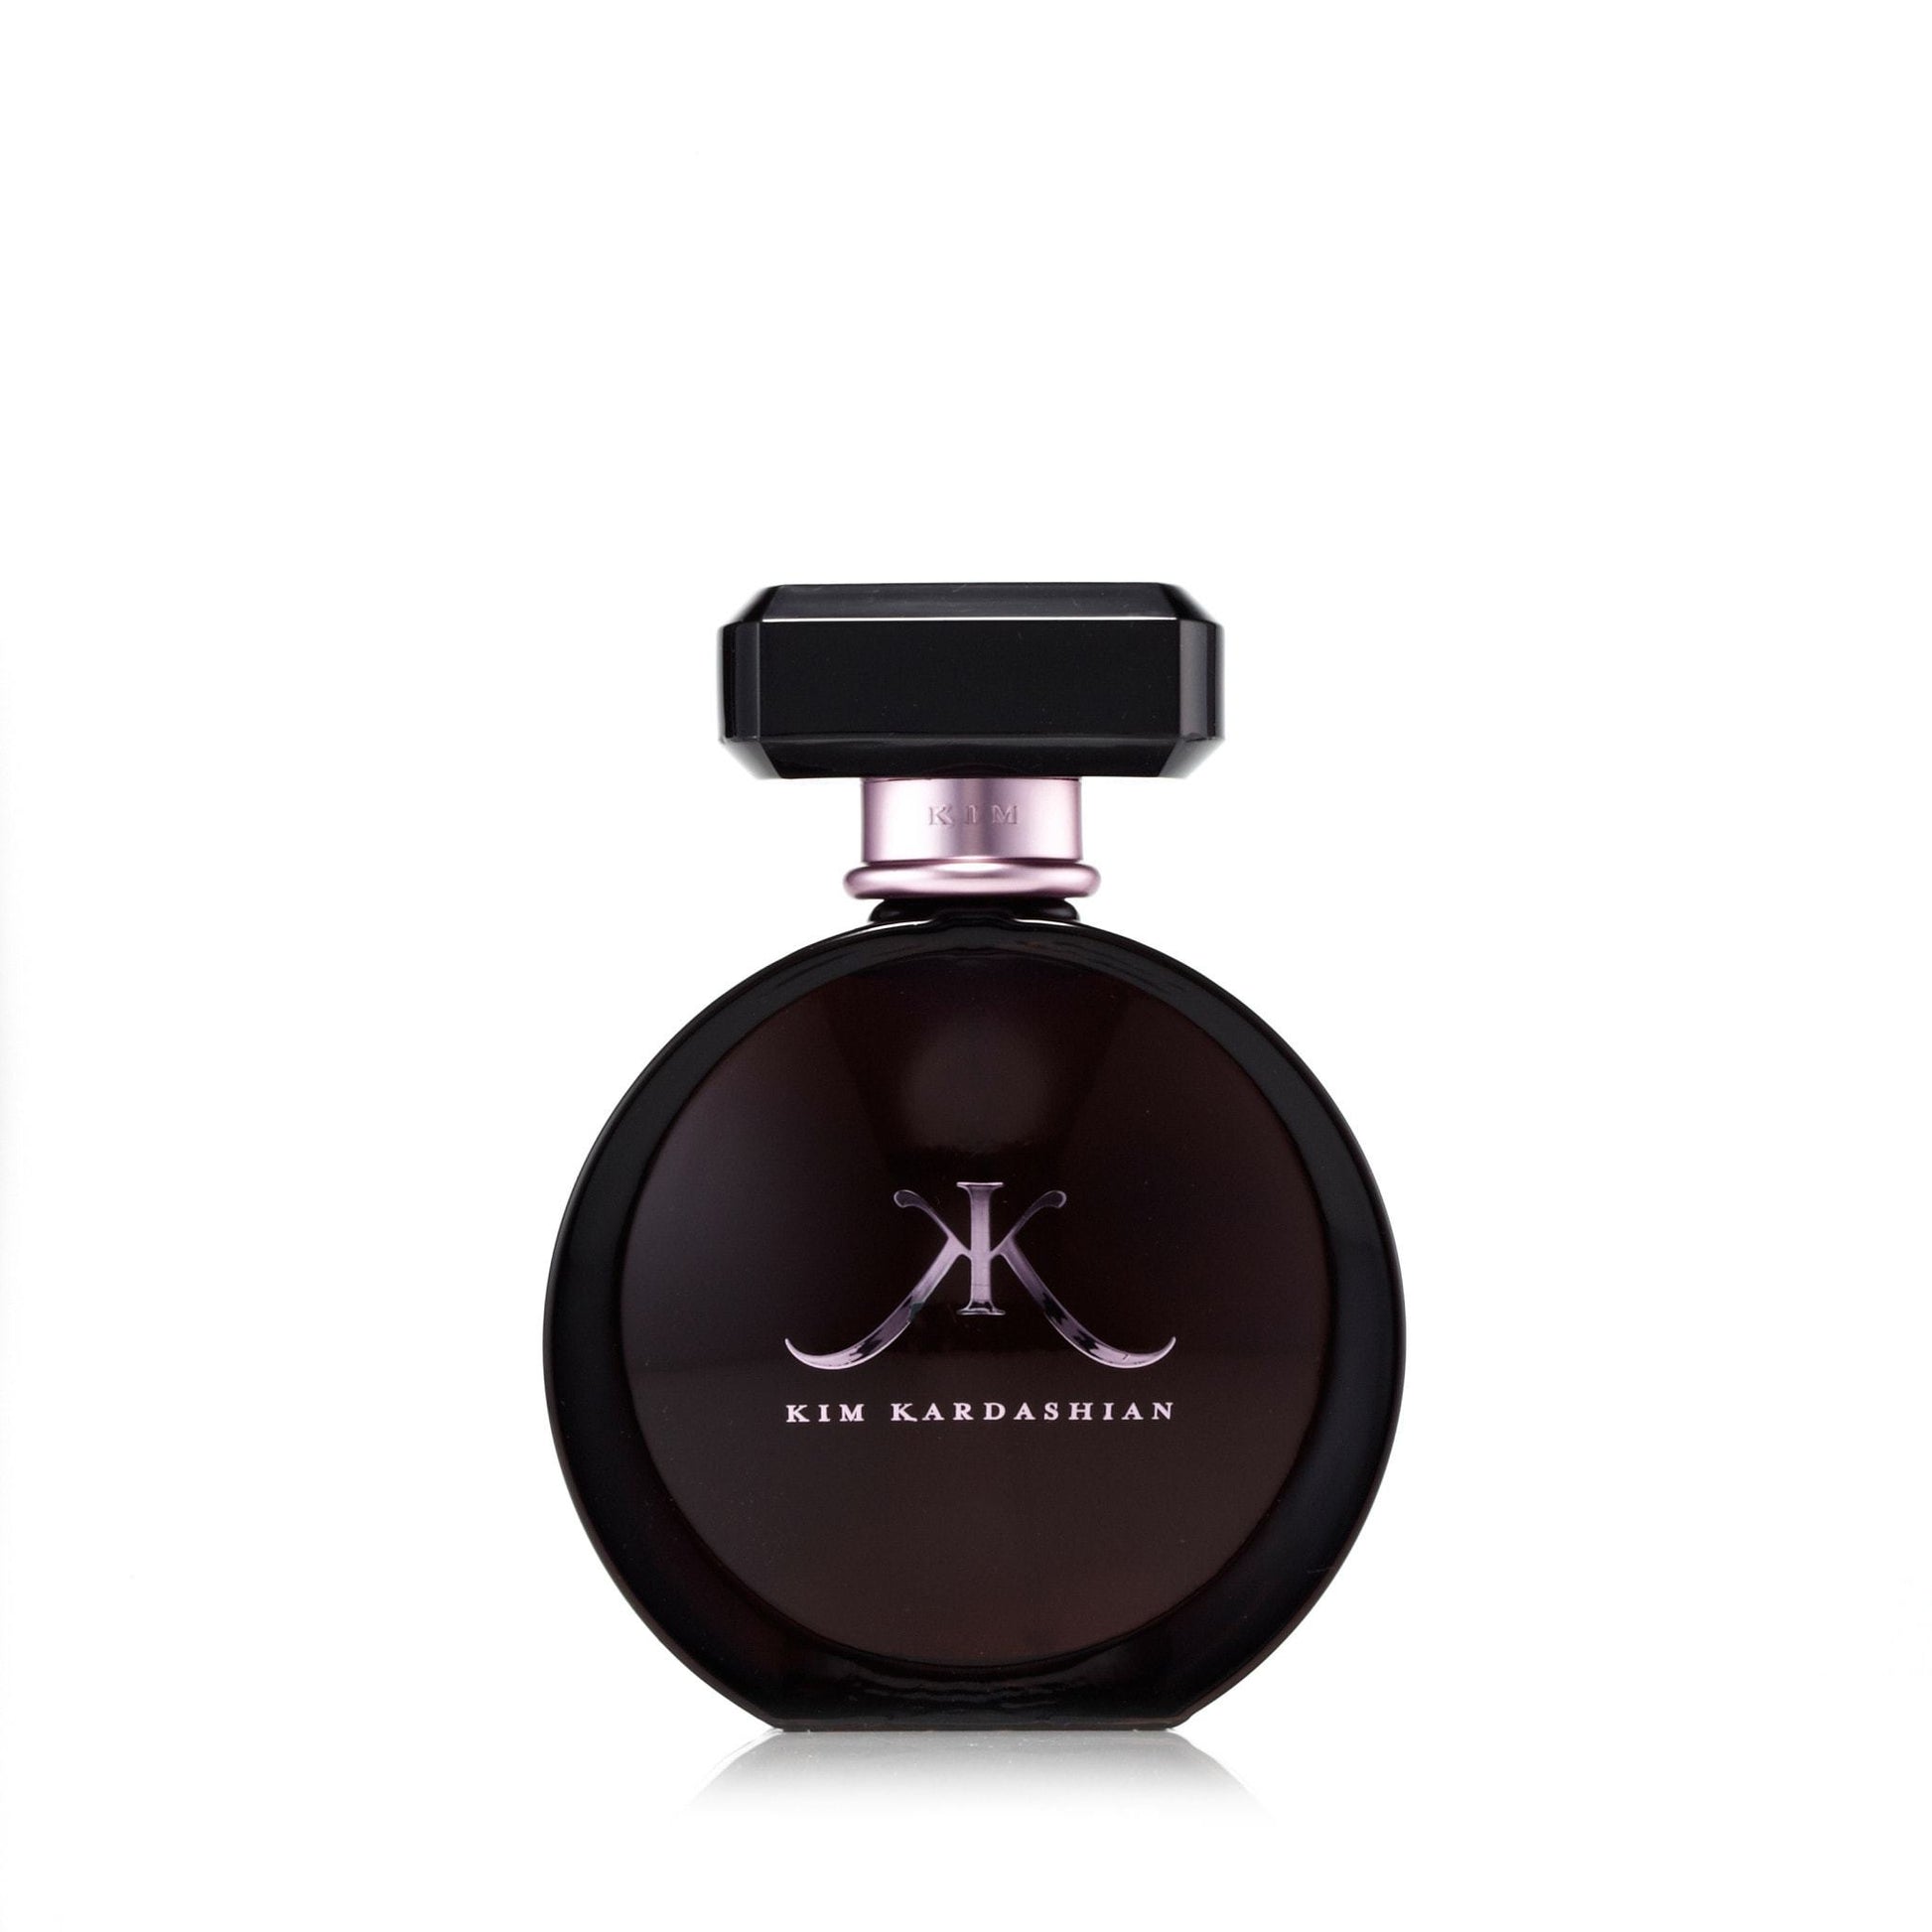 Kim Kardashian Eau de Parfum Spray for Women by Kim Kardashian, Product image 1